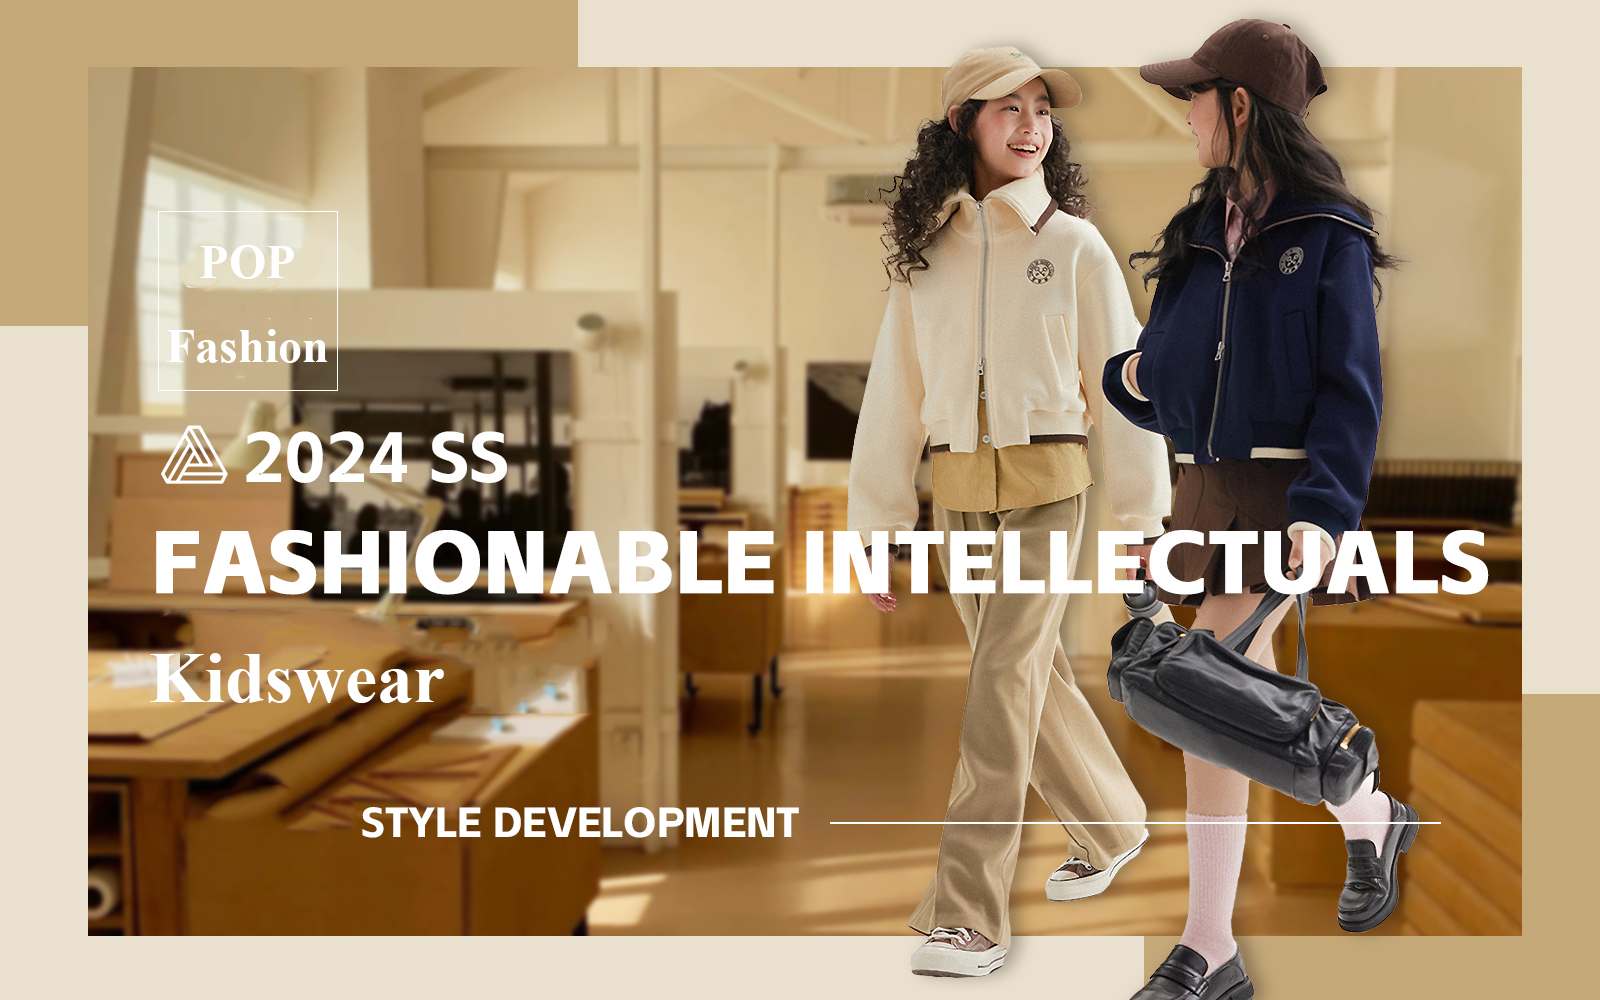 Fashionable Intellectuals -- The Design Development of Kidswear